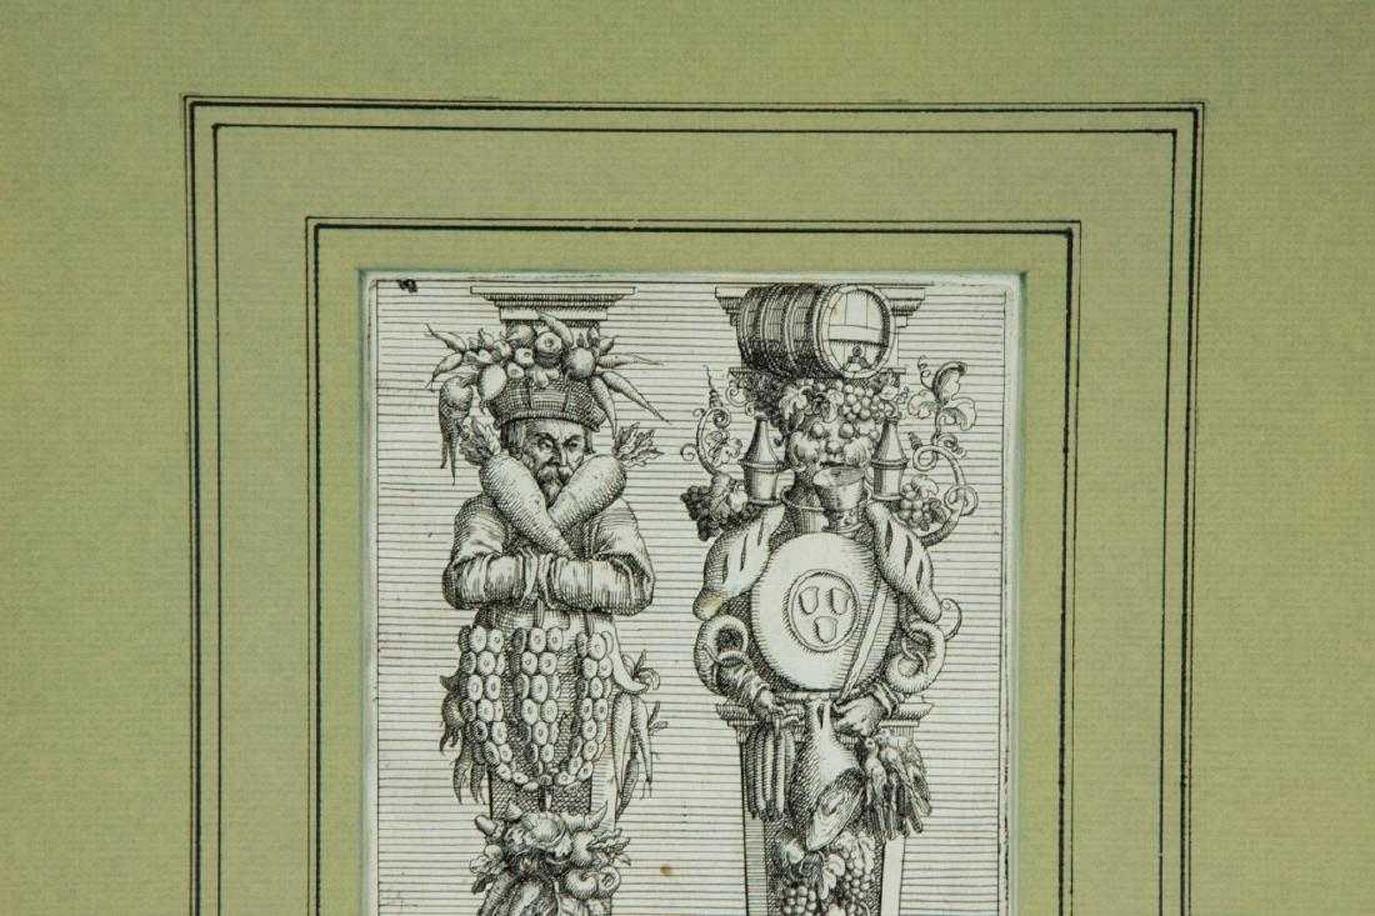 Wood Antique 18th Century Giuseppe Arcimboldo Engraving